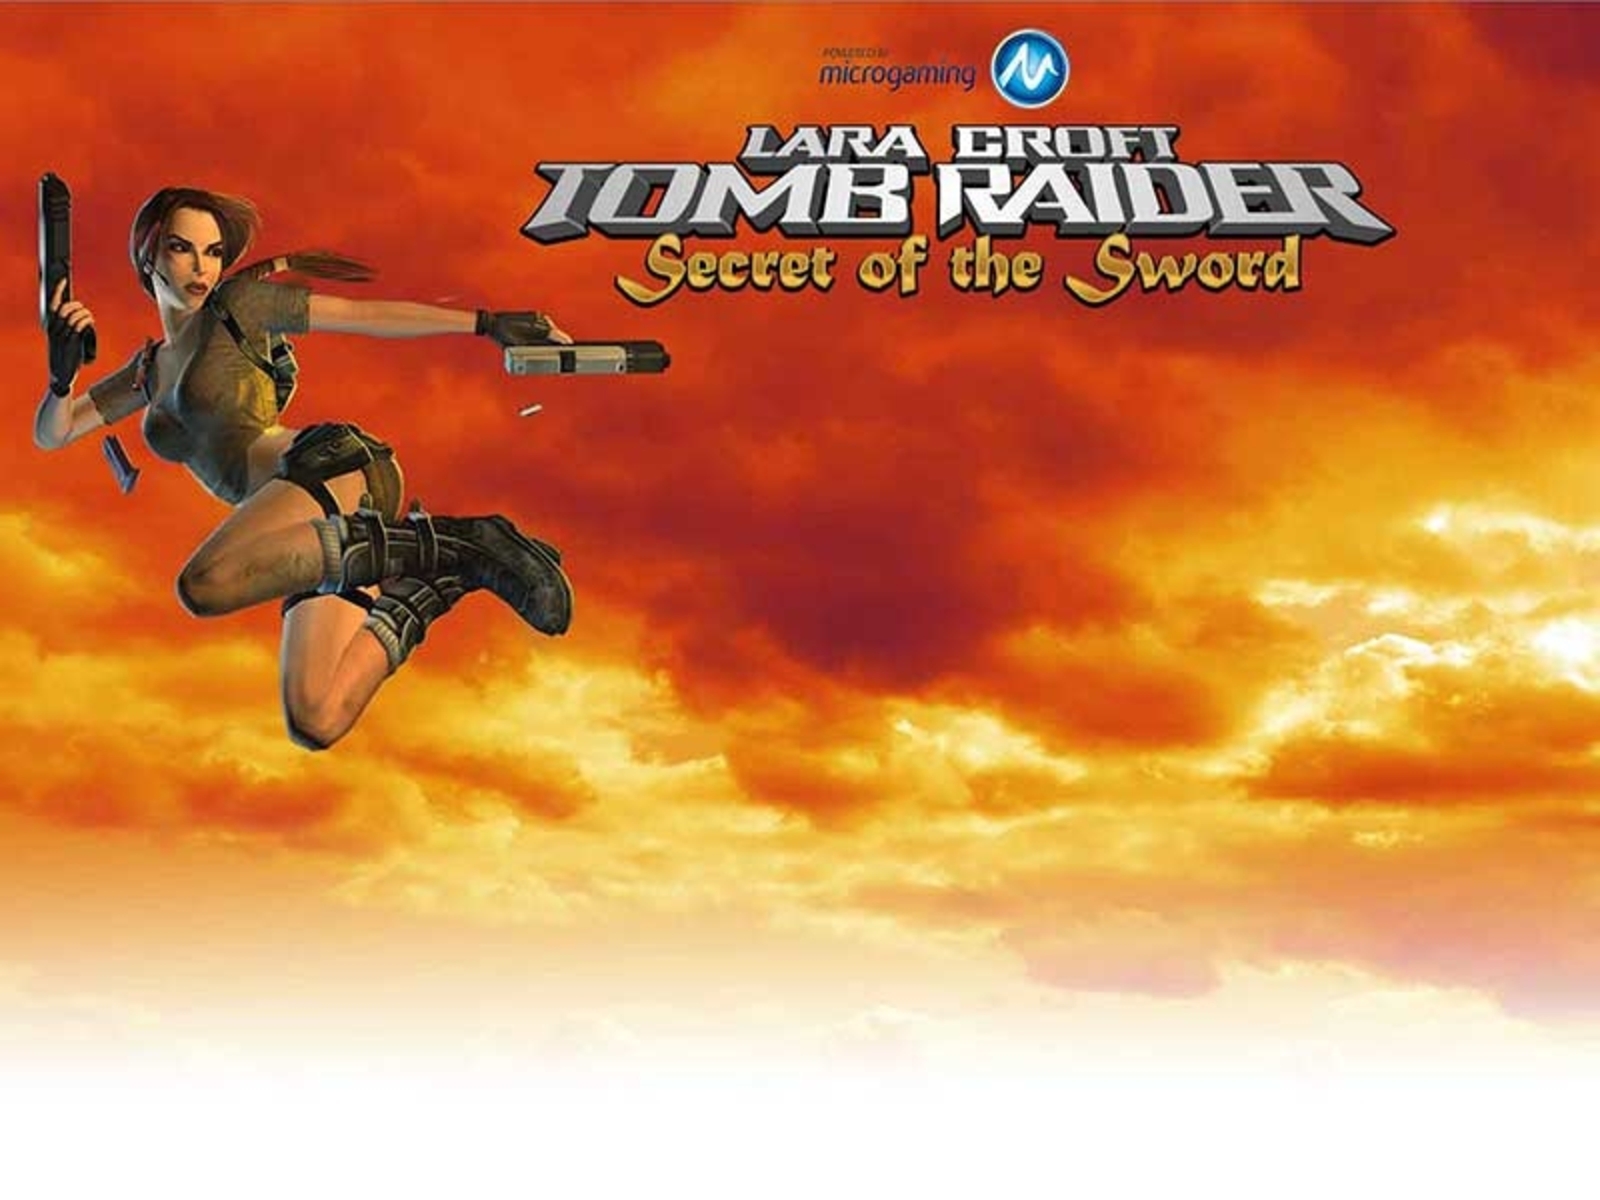 Tomb Raider Secret of the Sword demo